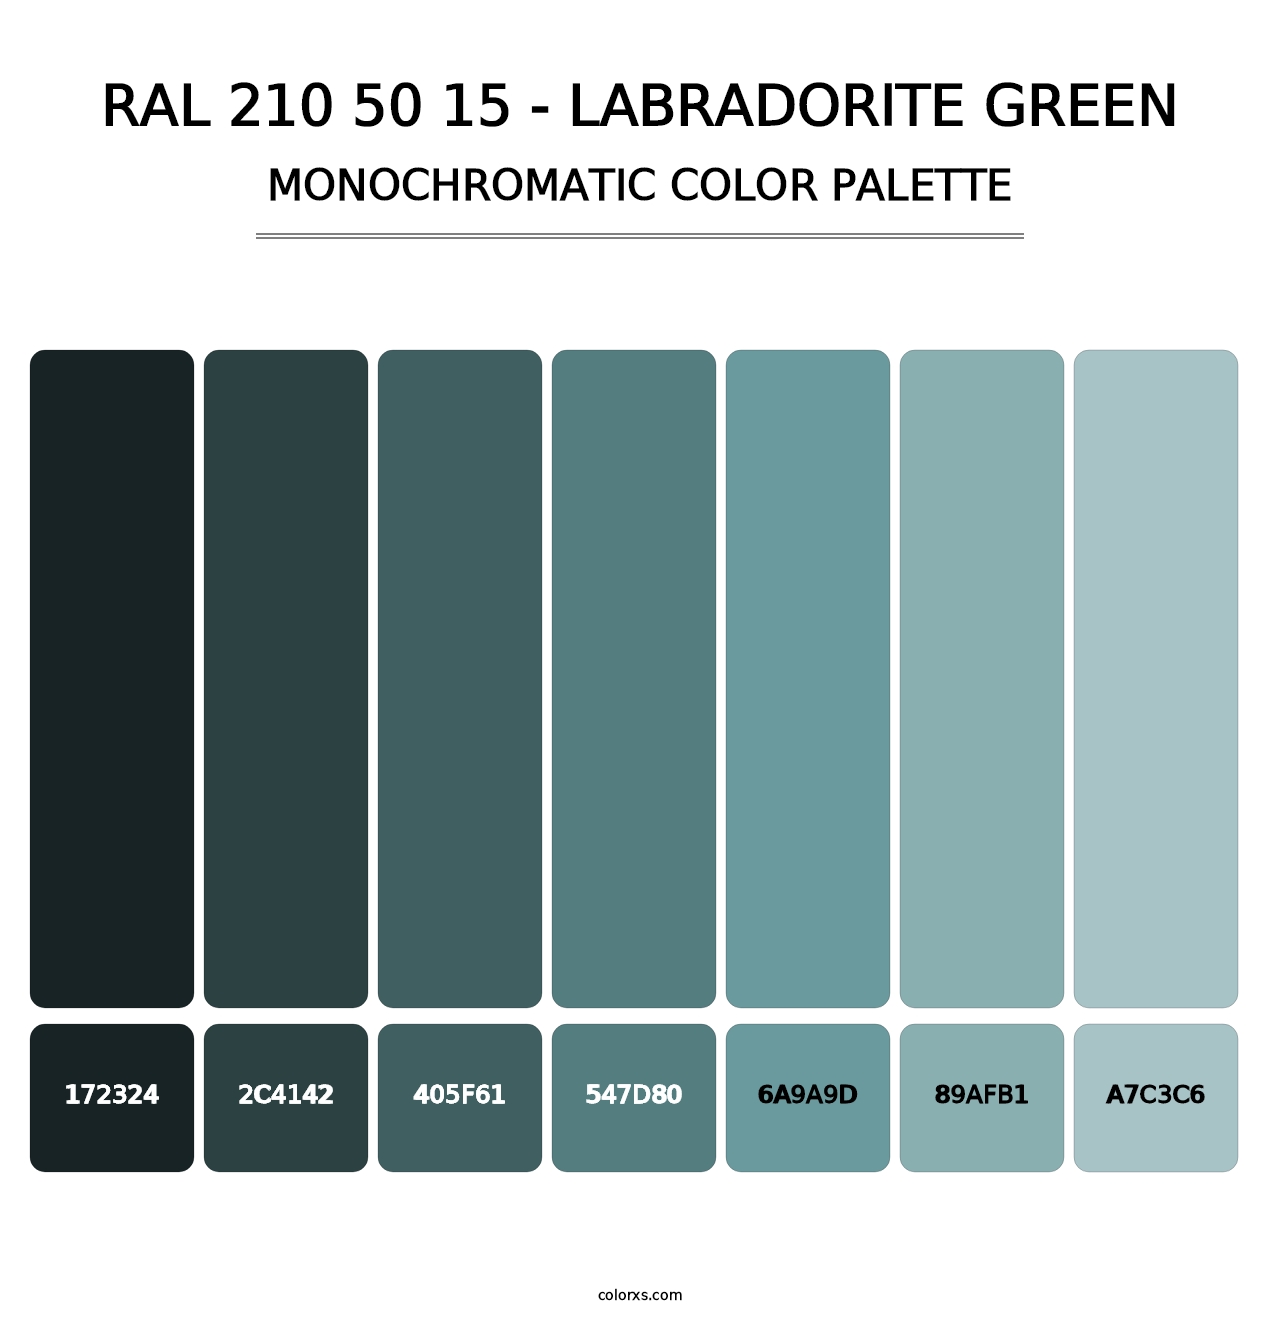 RAL 210 50 15 - Labradorite Green - Monochromatic Color Palette